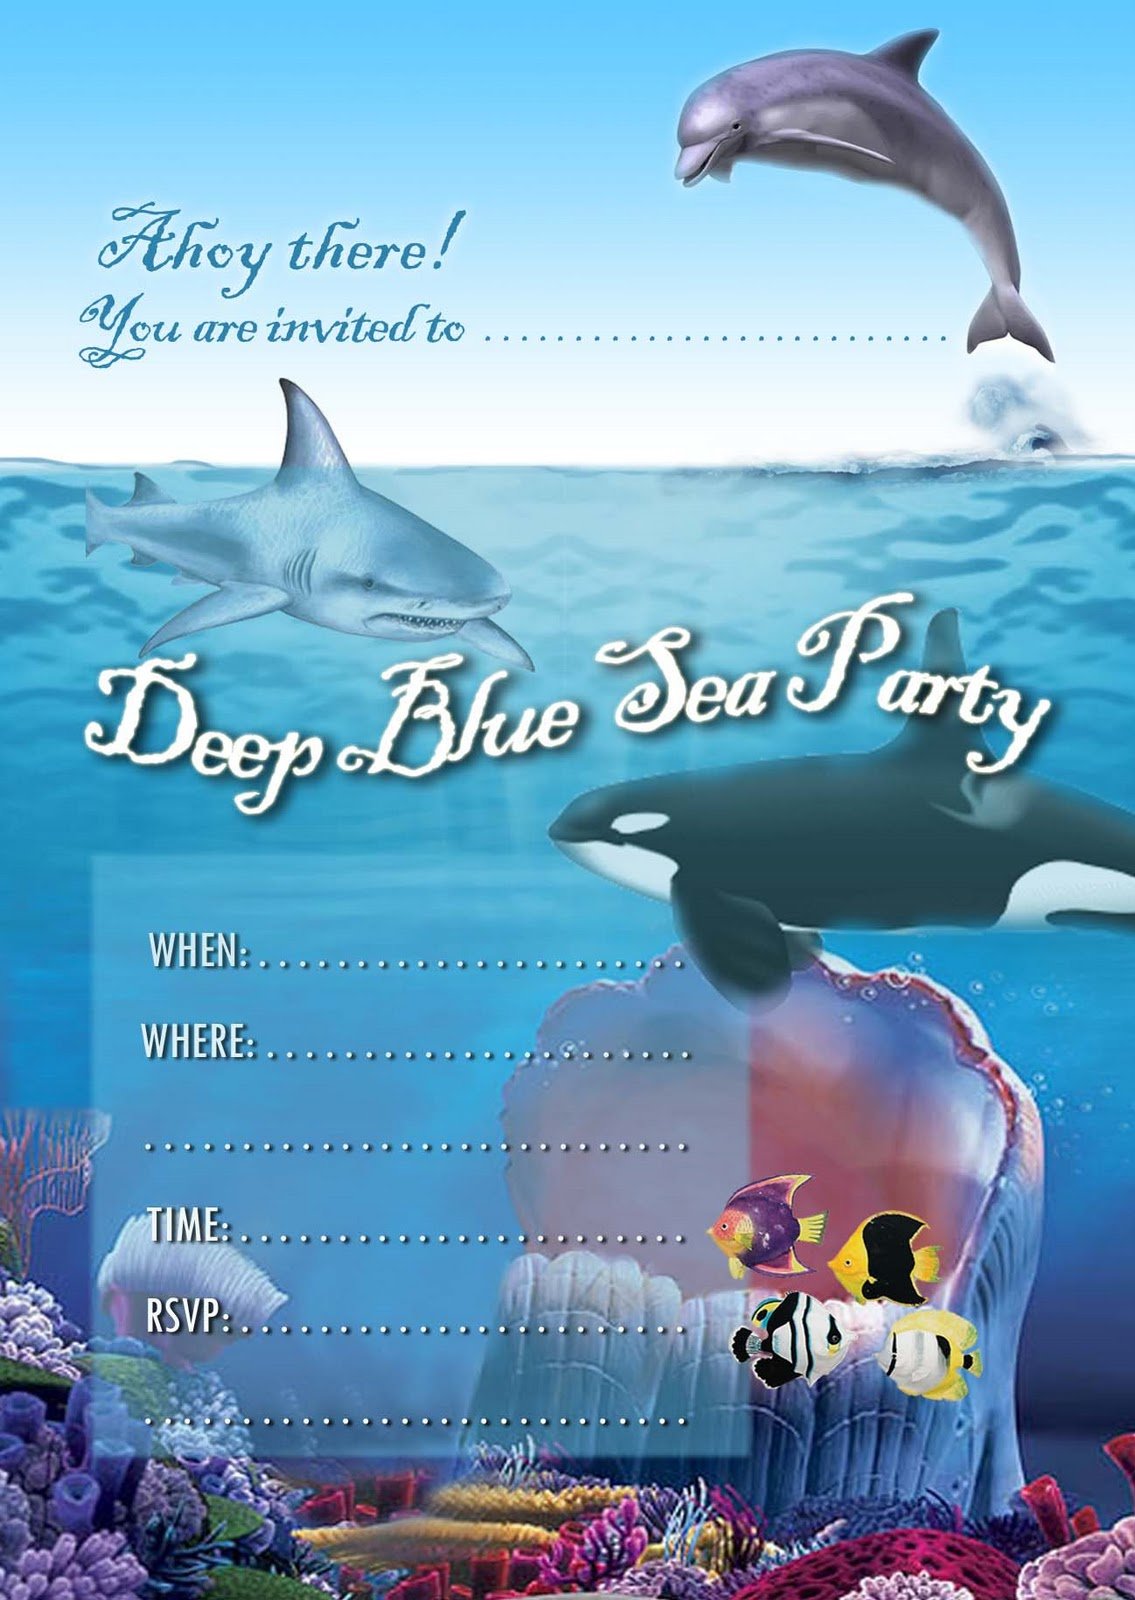 Free Kids Party Invitations  Deep Blue Sea Party Invitation